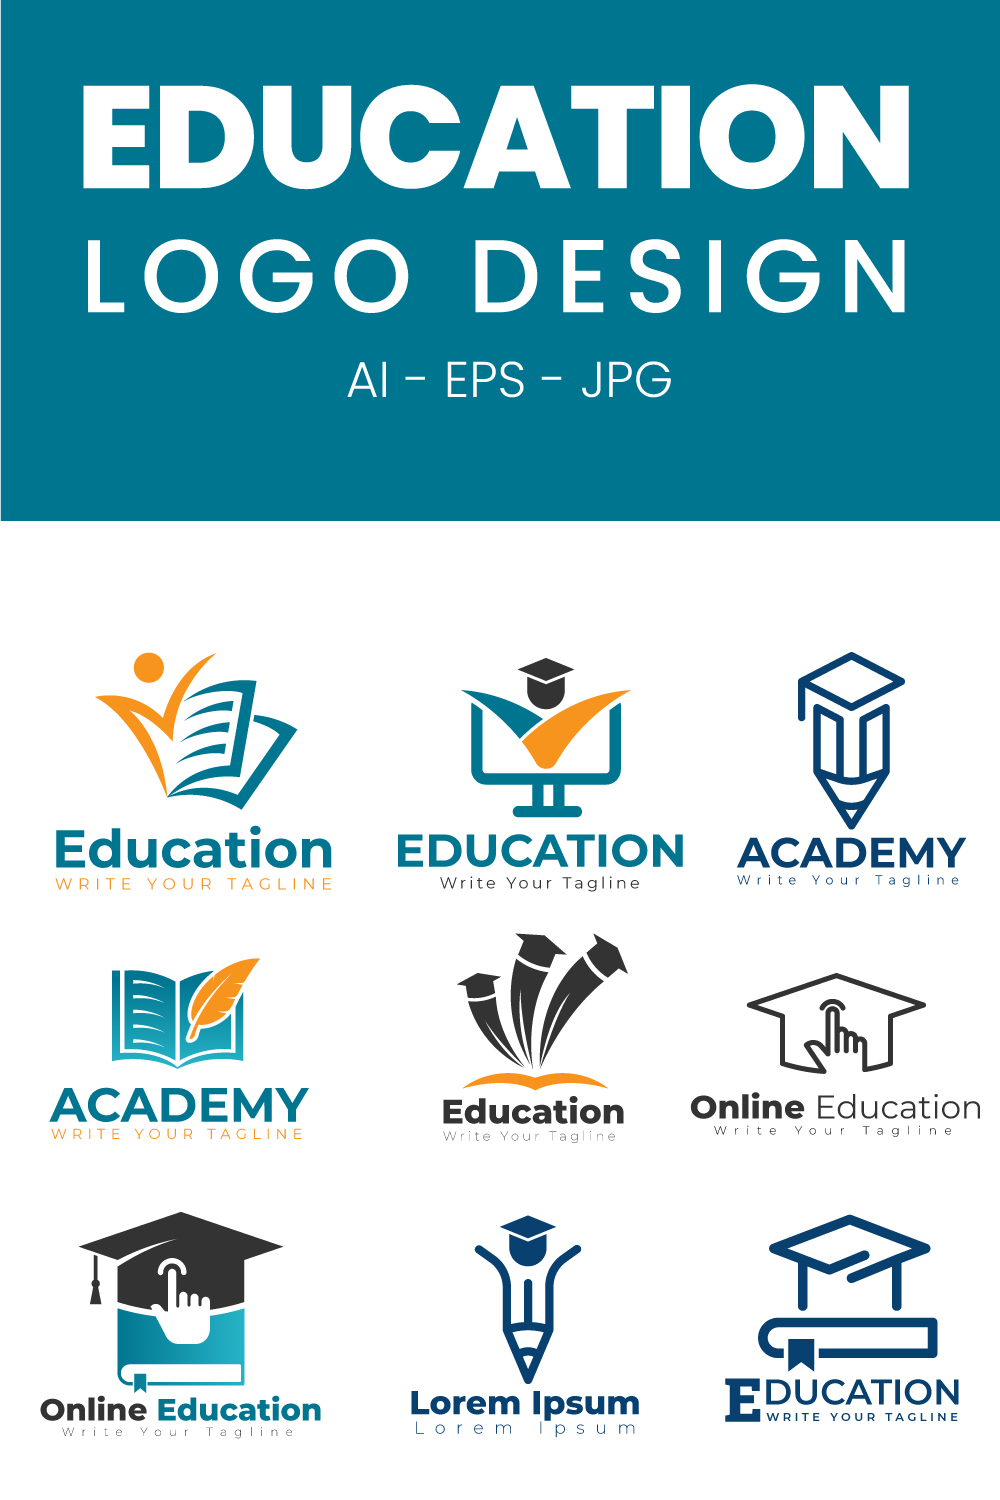 20 Education Logo Designs pinterest image.